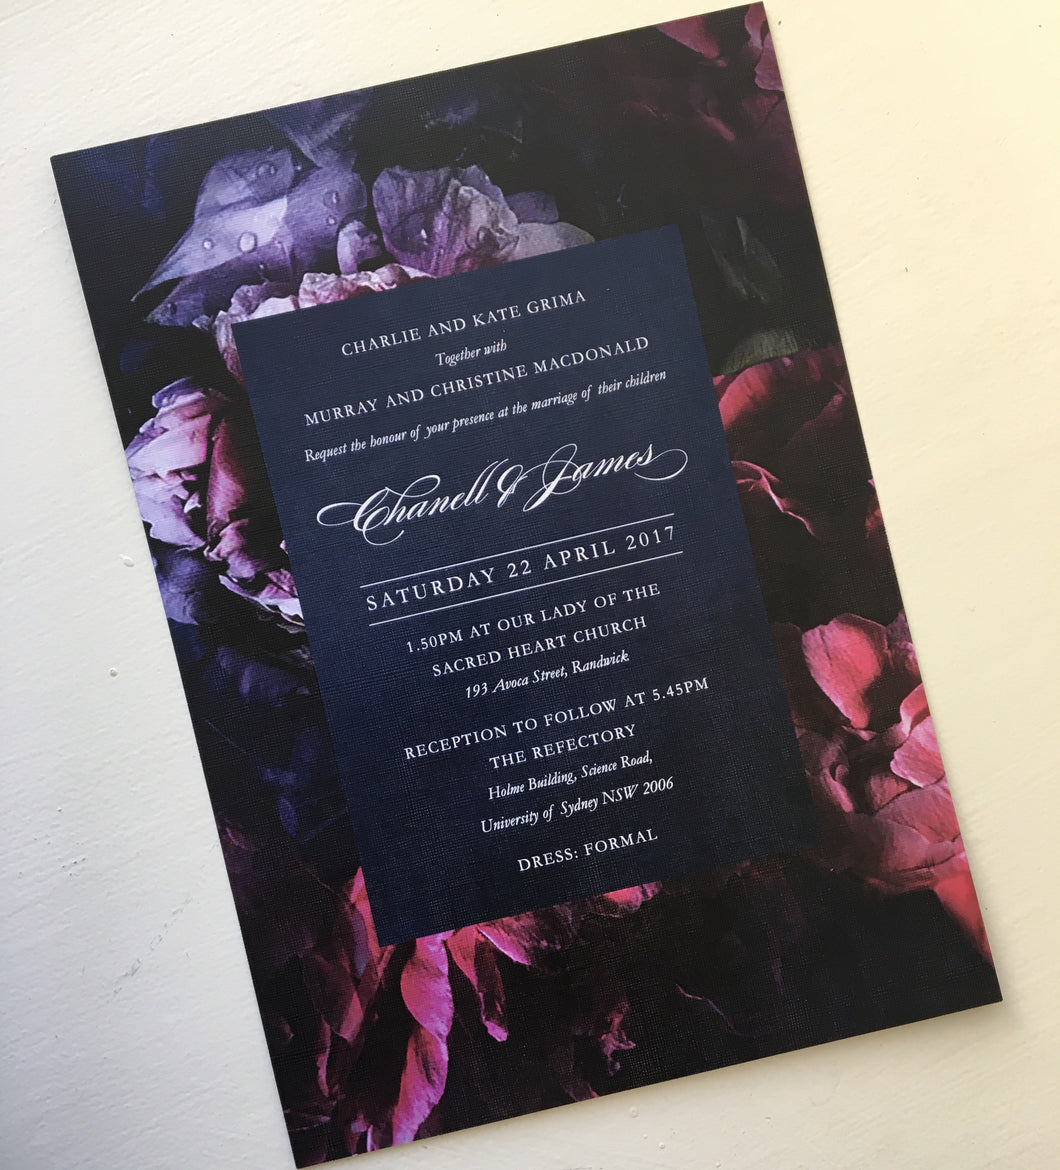 Chanell's Wedding Invitations